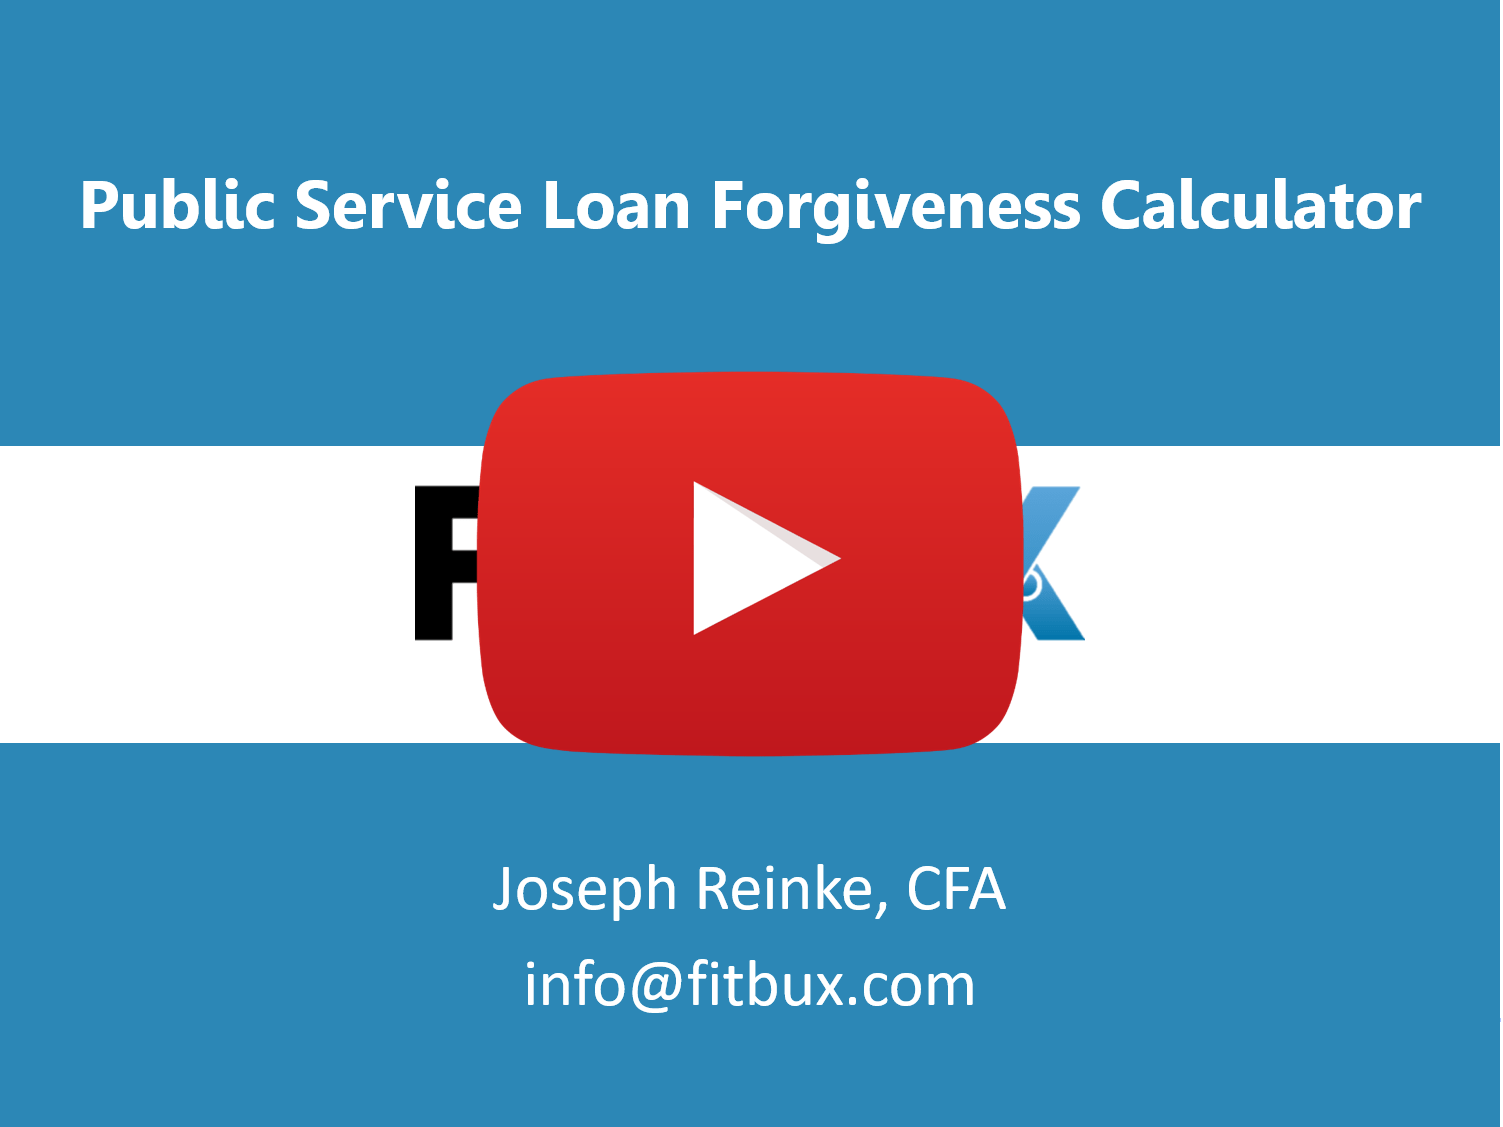 Public service loan frogiveness calculator video